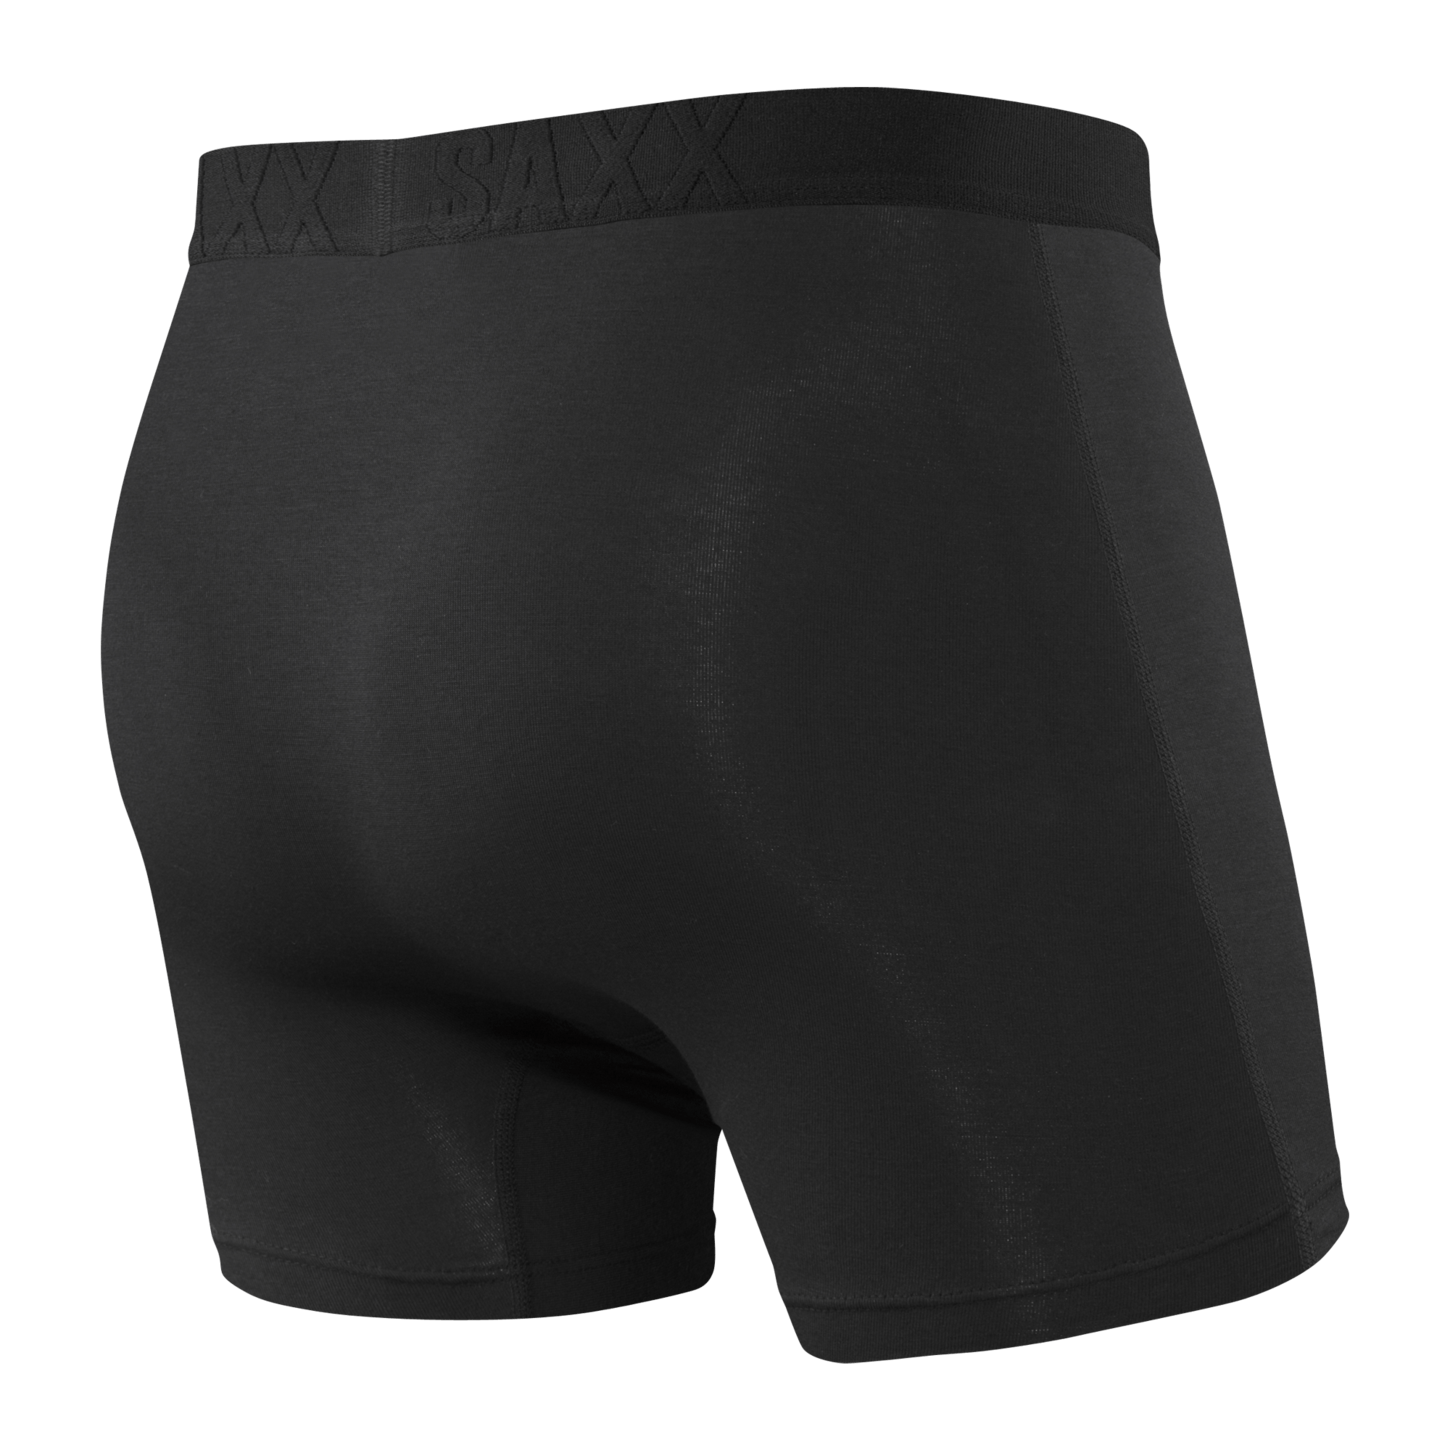 SAXX Ultra Fly Boxer Brief Black/Black MENS APPAREL - Men's Underwear Saxx M 